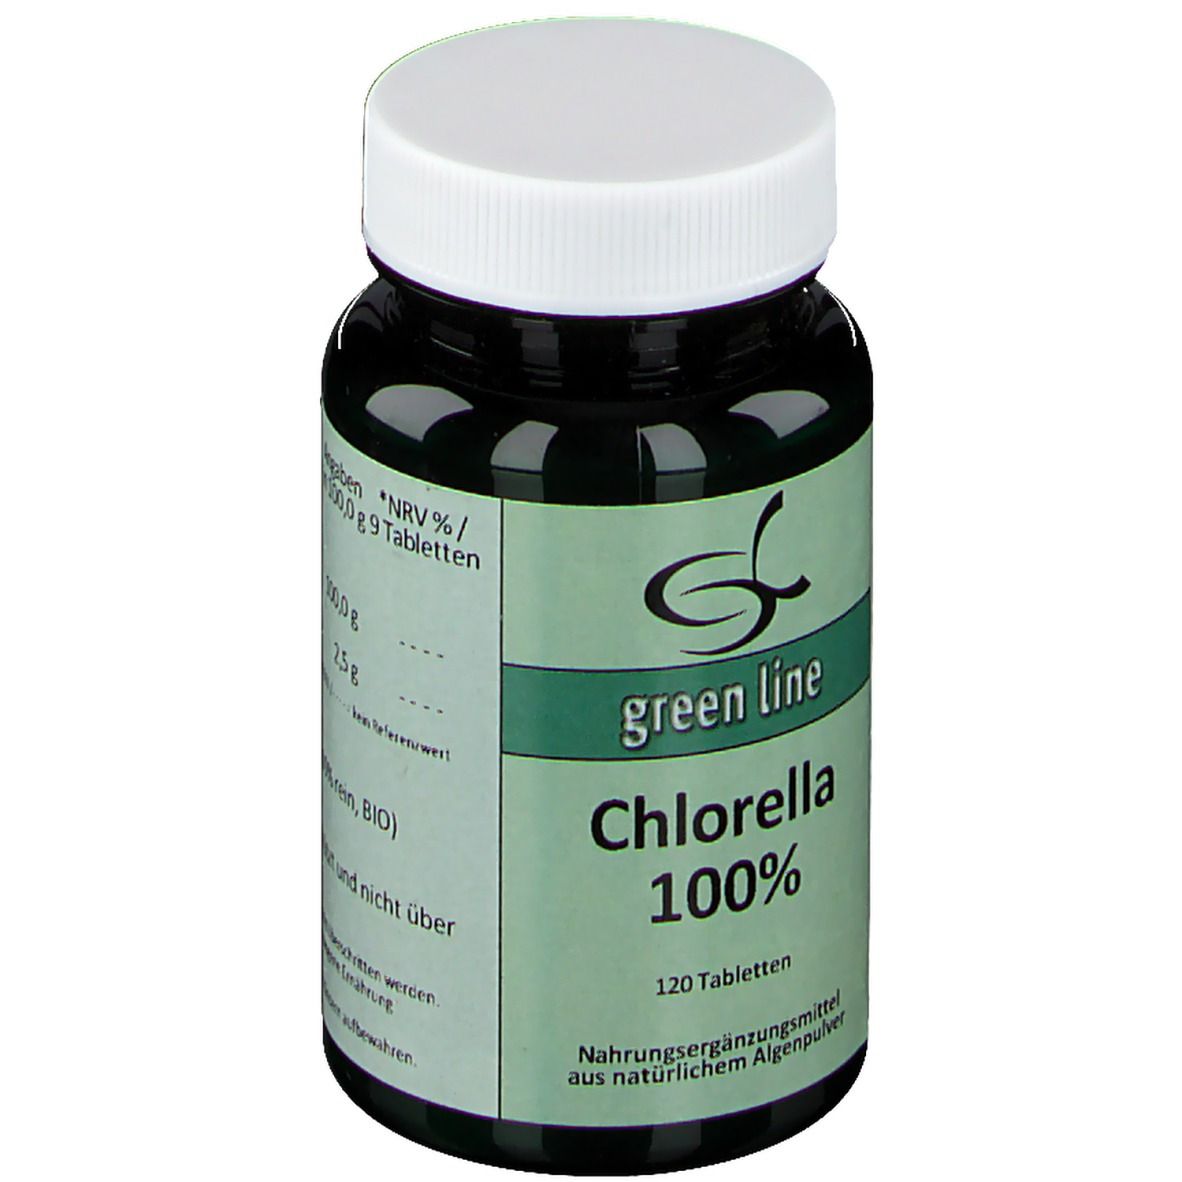 green line Chlorella 100%